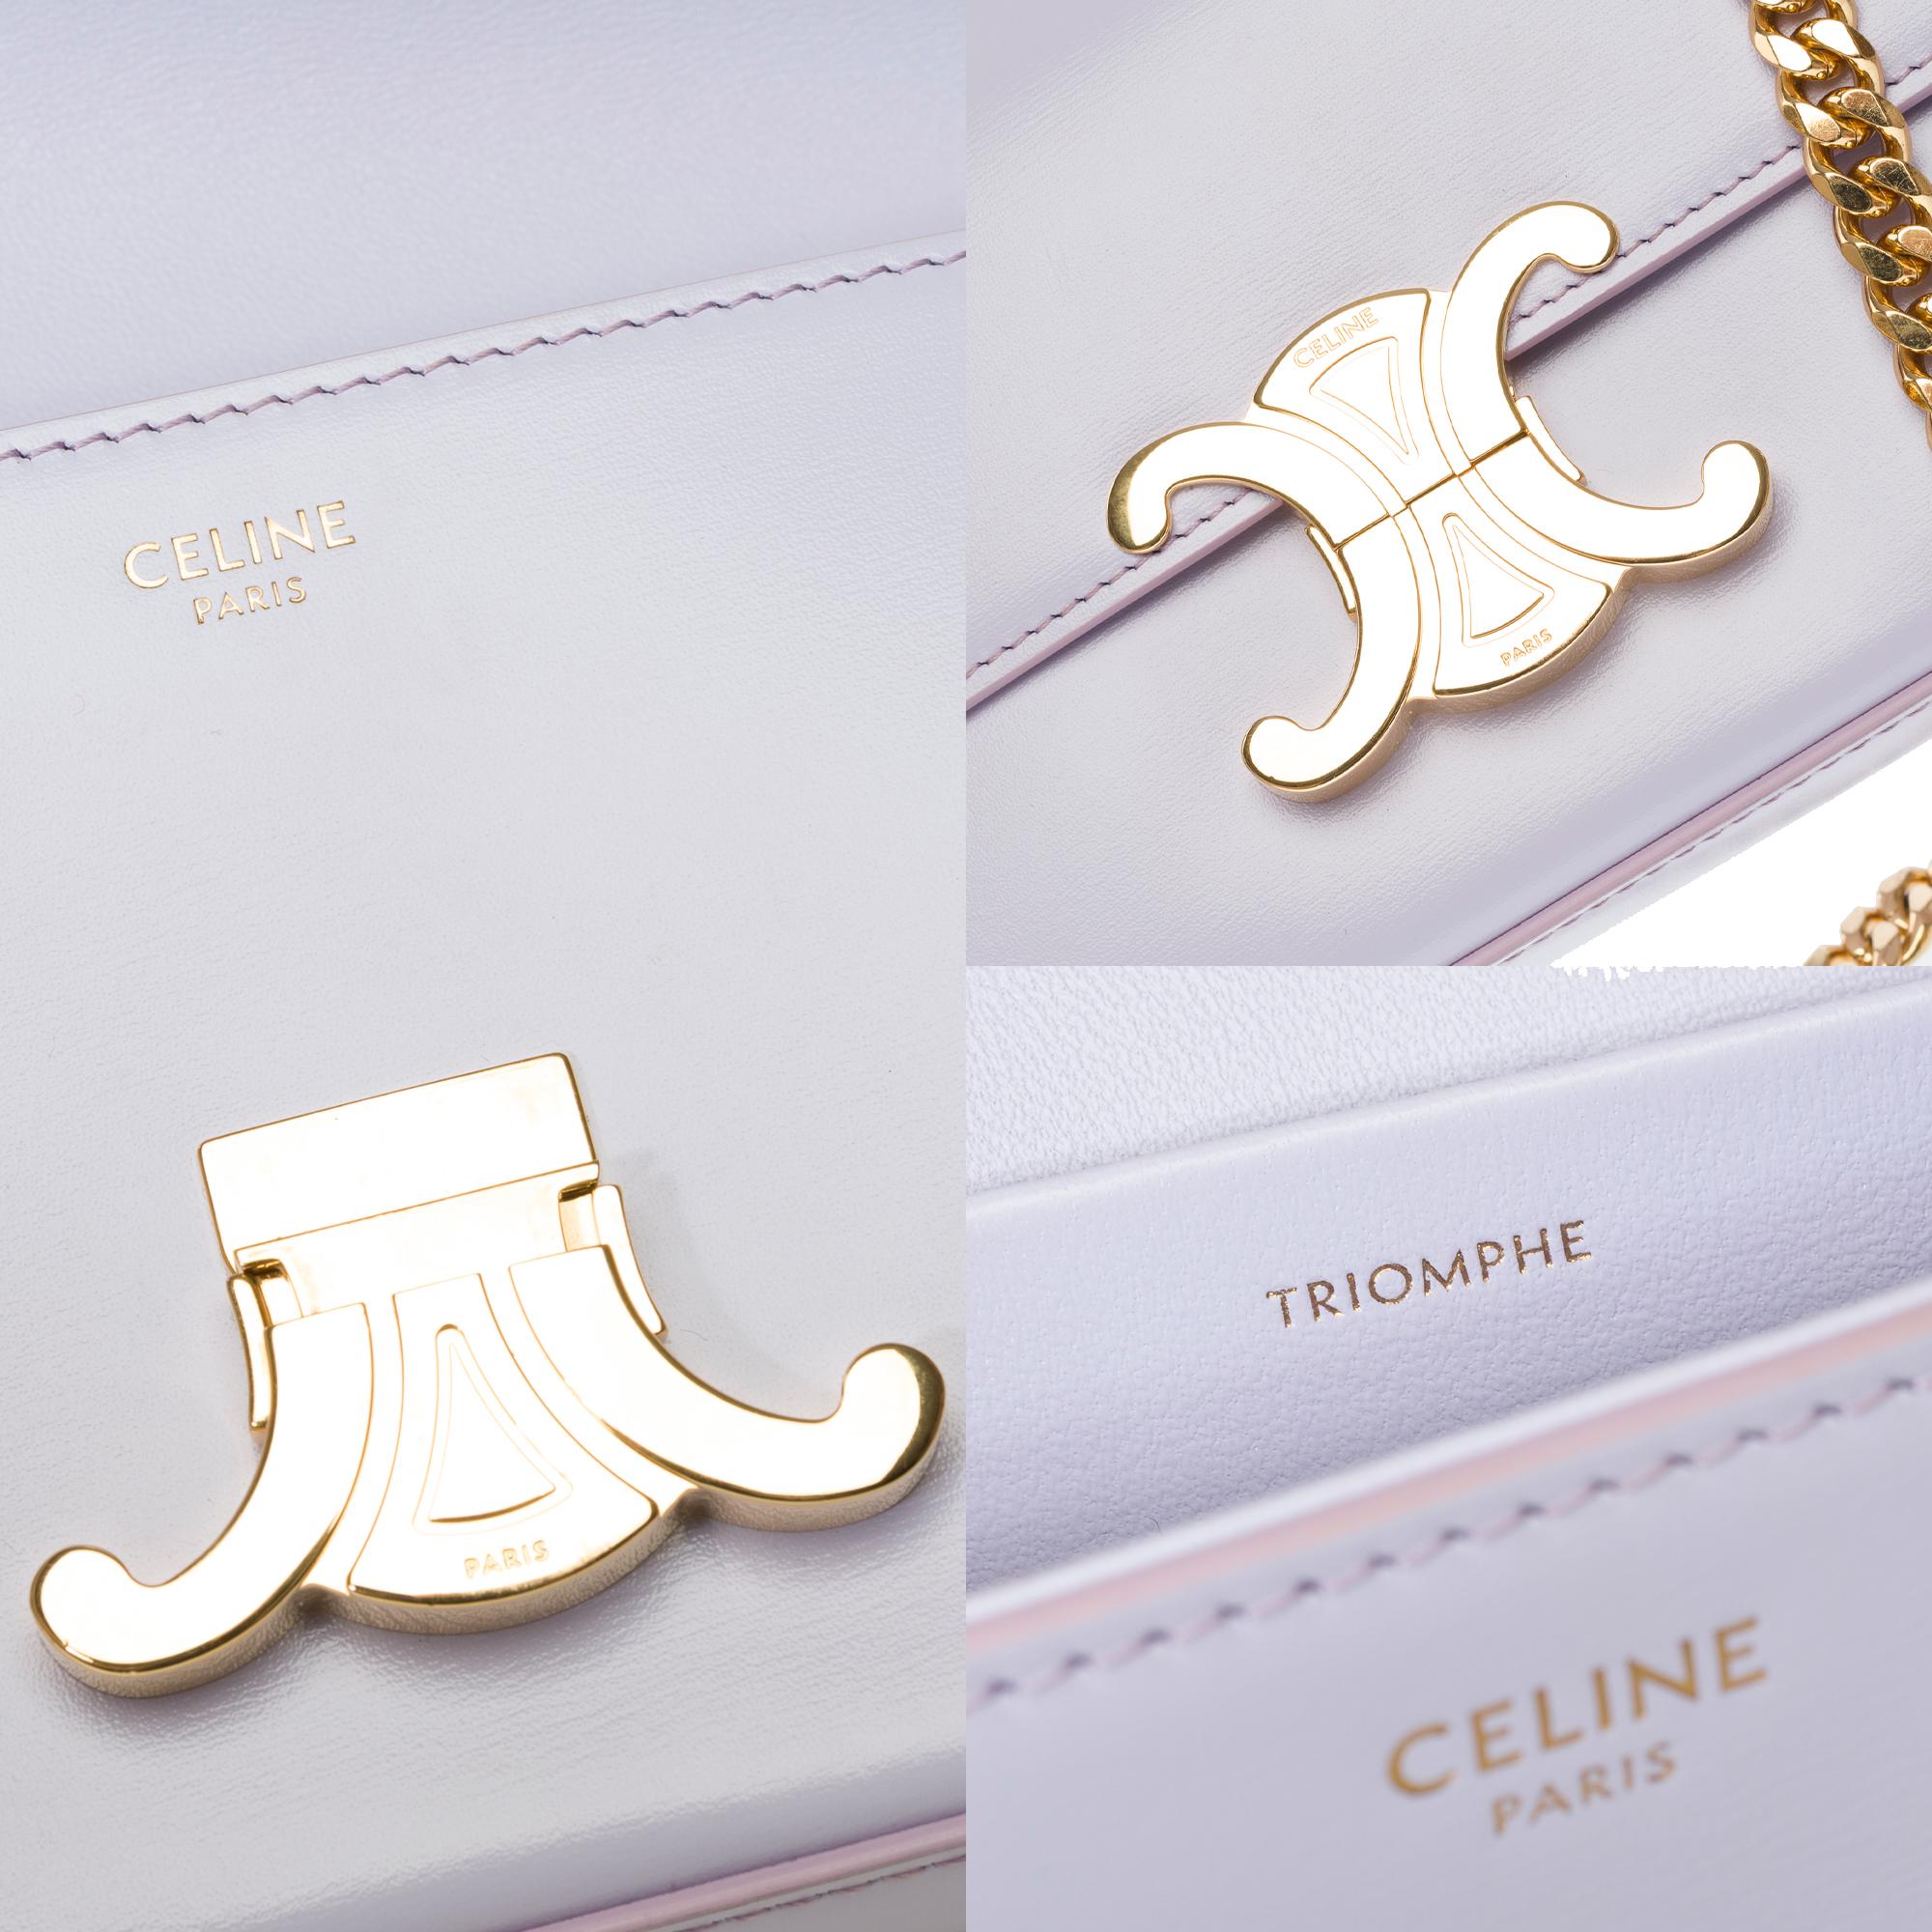 Celine Triomphe shoulder flap bag in satin lilac calf leather, GHW For Sale 2